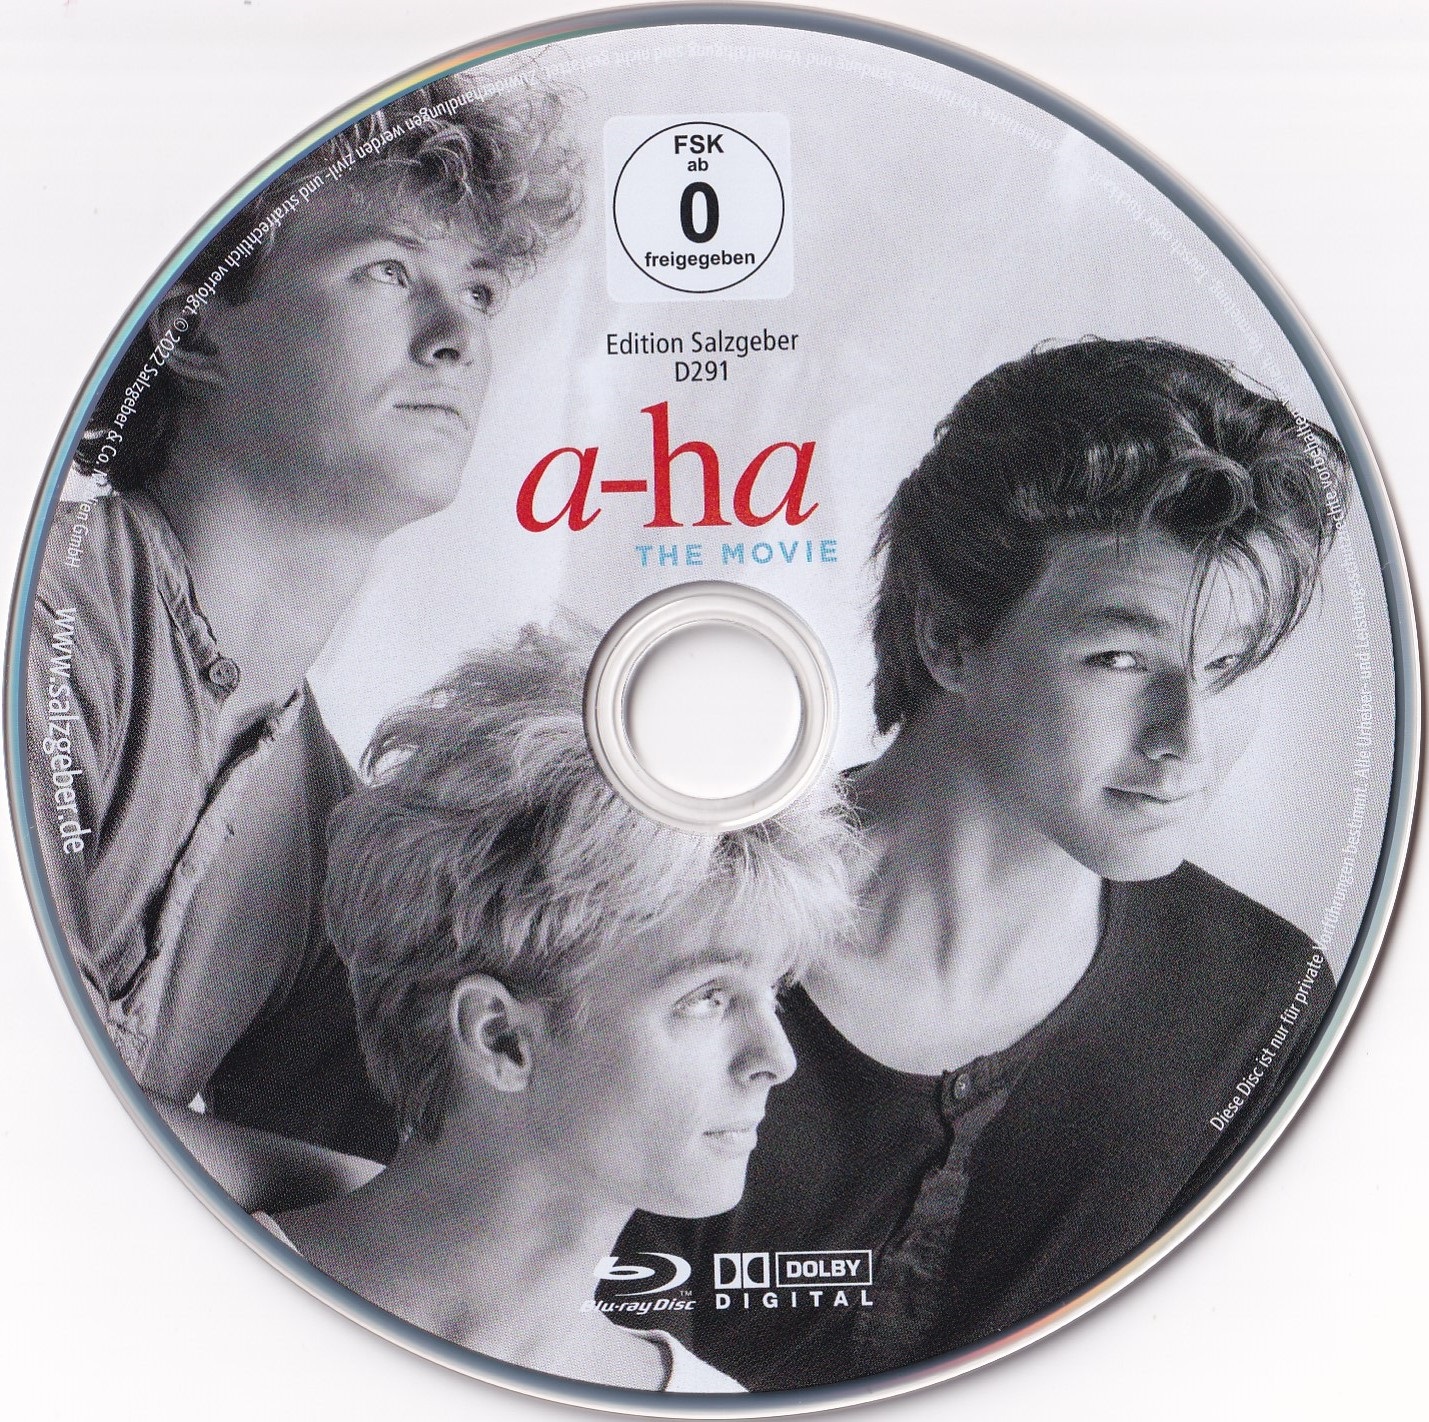 A-ha The Movie (BLU-RAY)